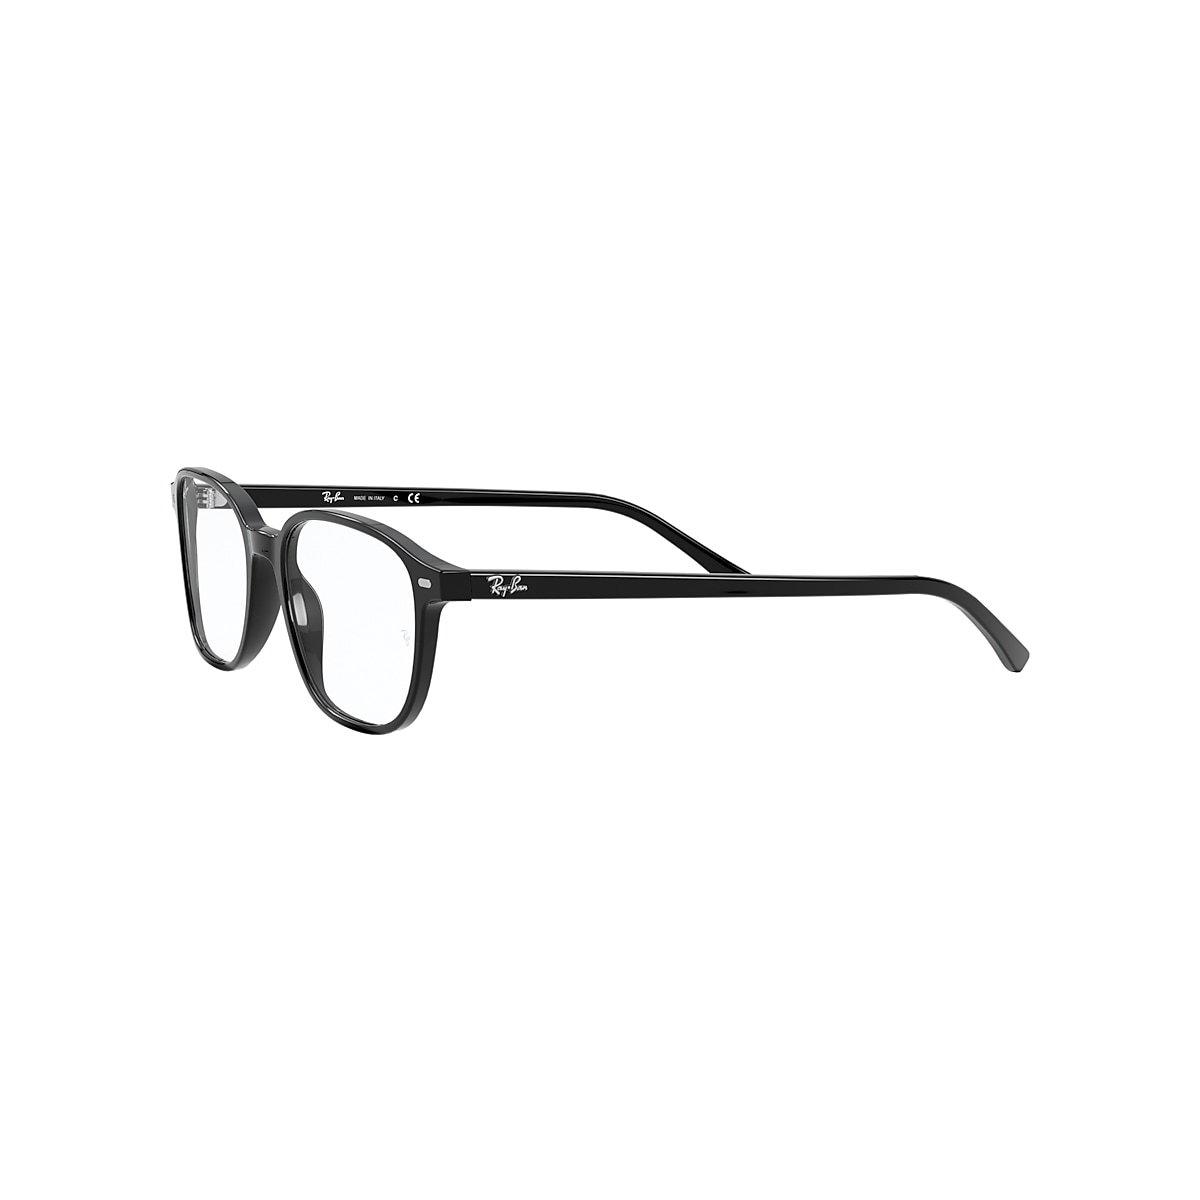 Leonard Optics Eyeglasses with Black Frame | Ray-Ban®